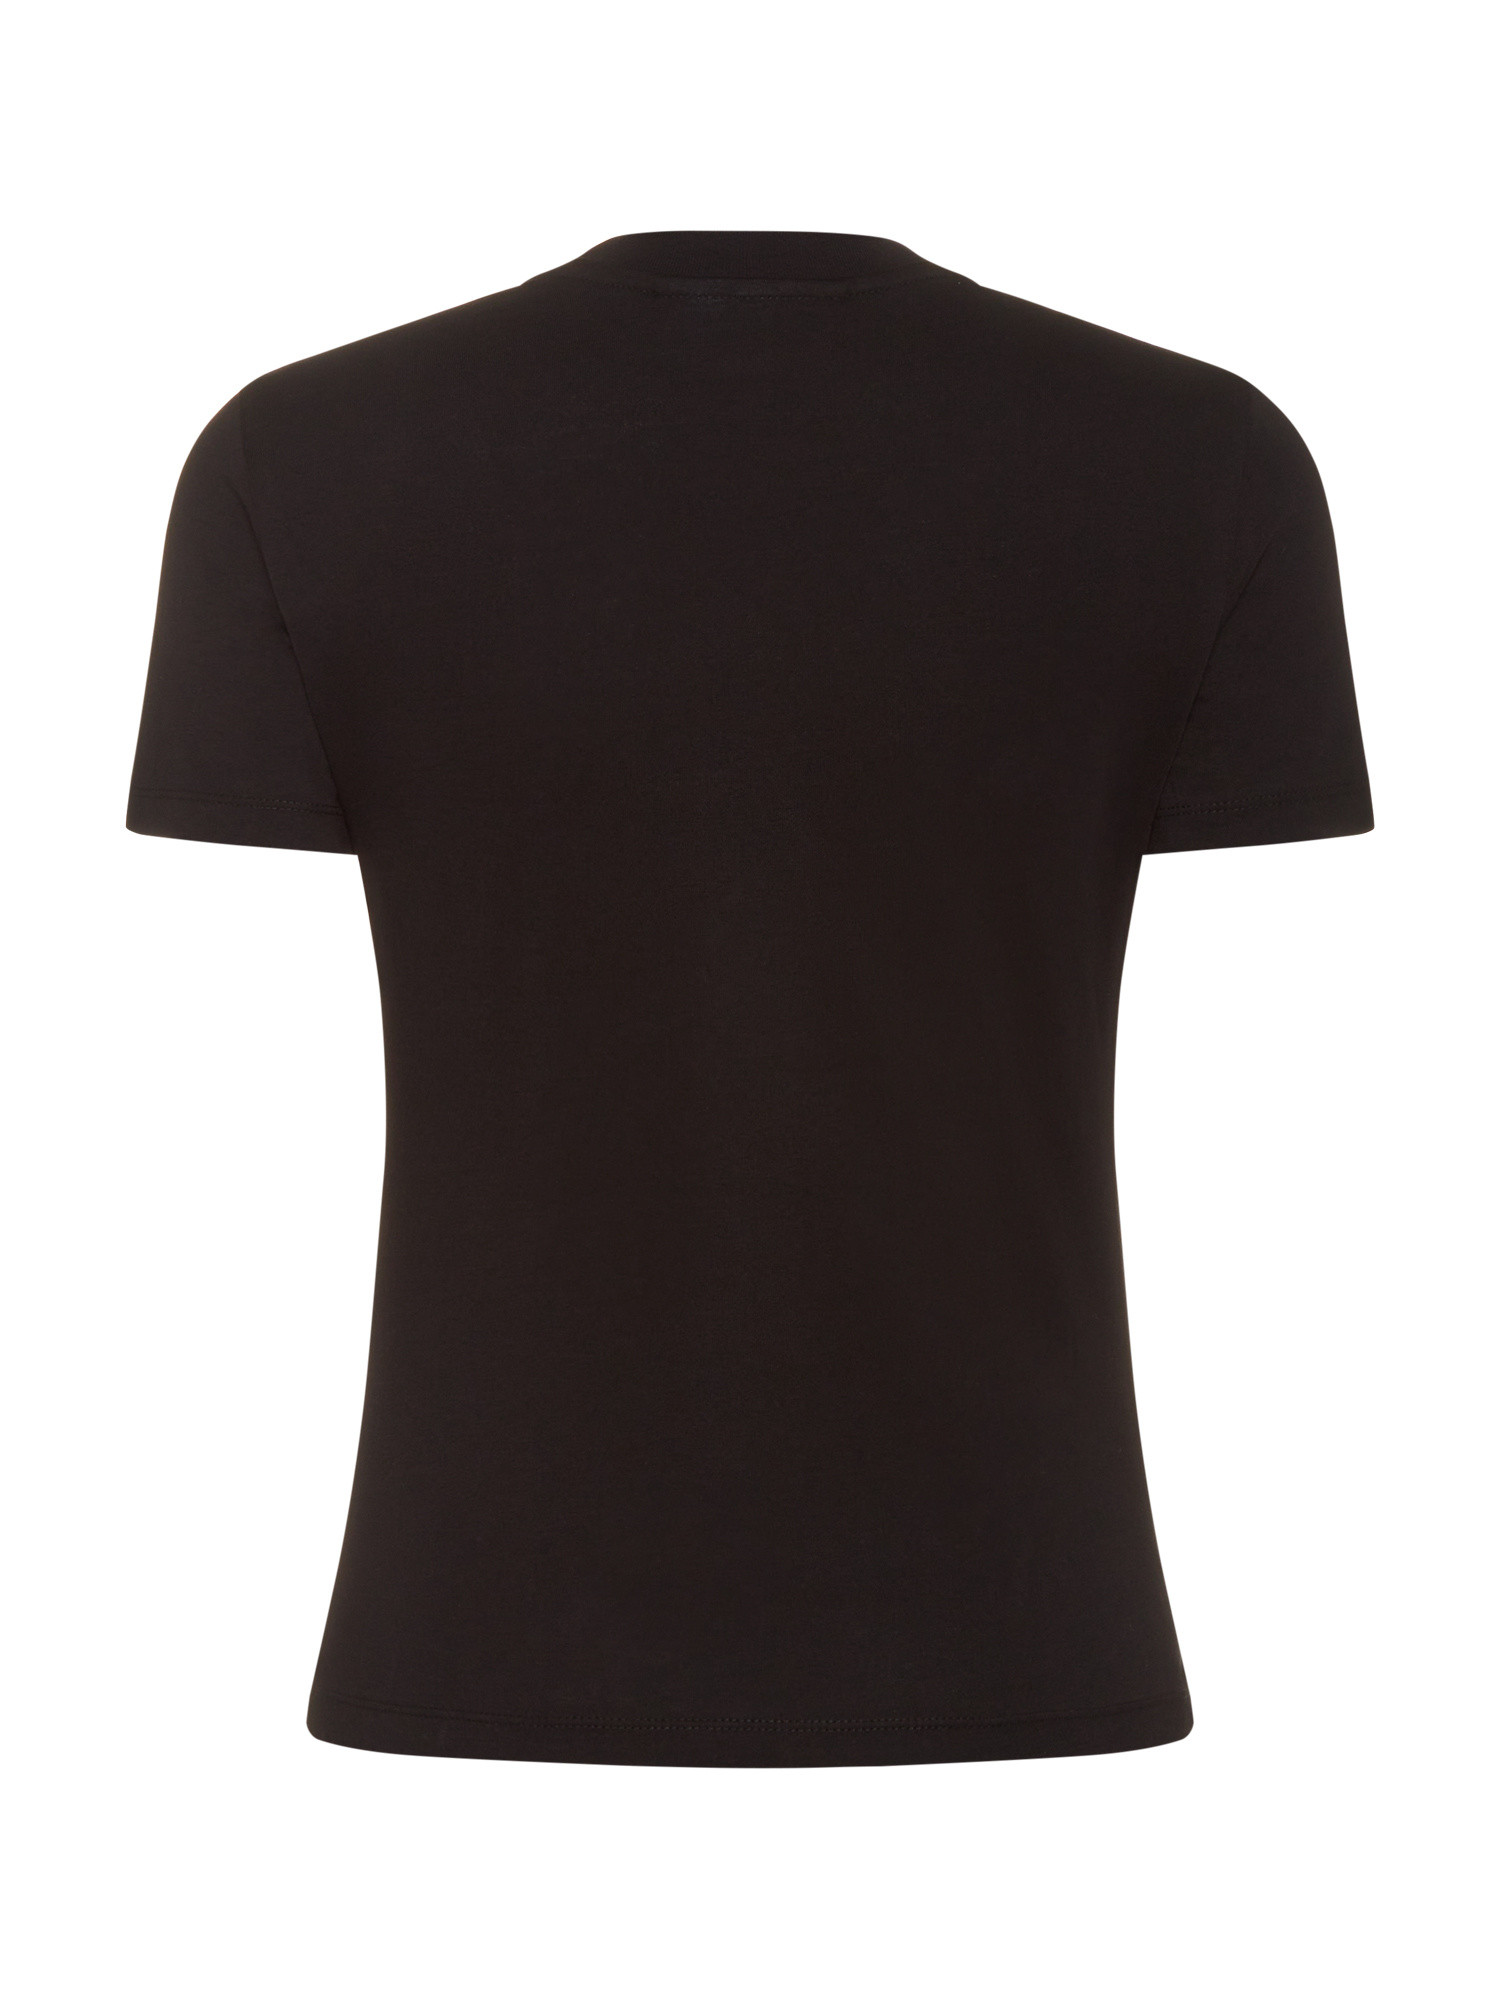 Chiara Ferragni - Claim T-shirt, Black, large image number 1